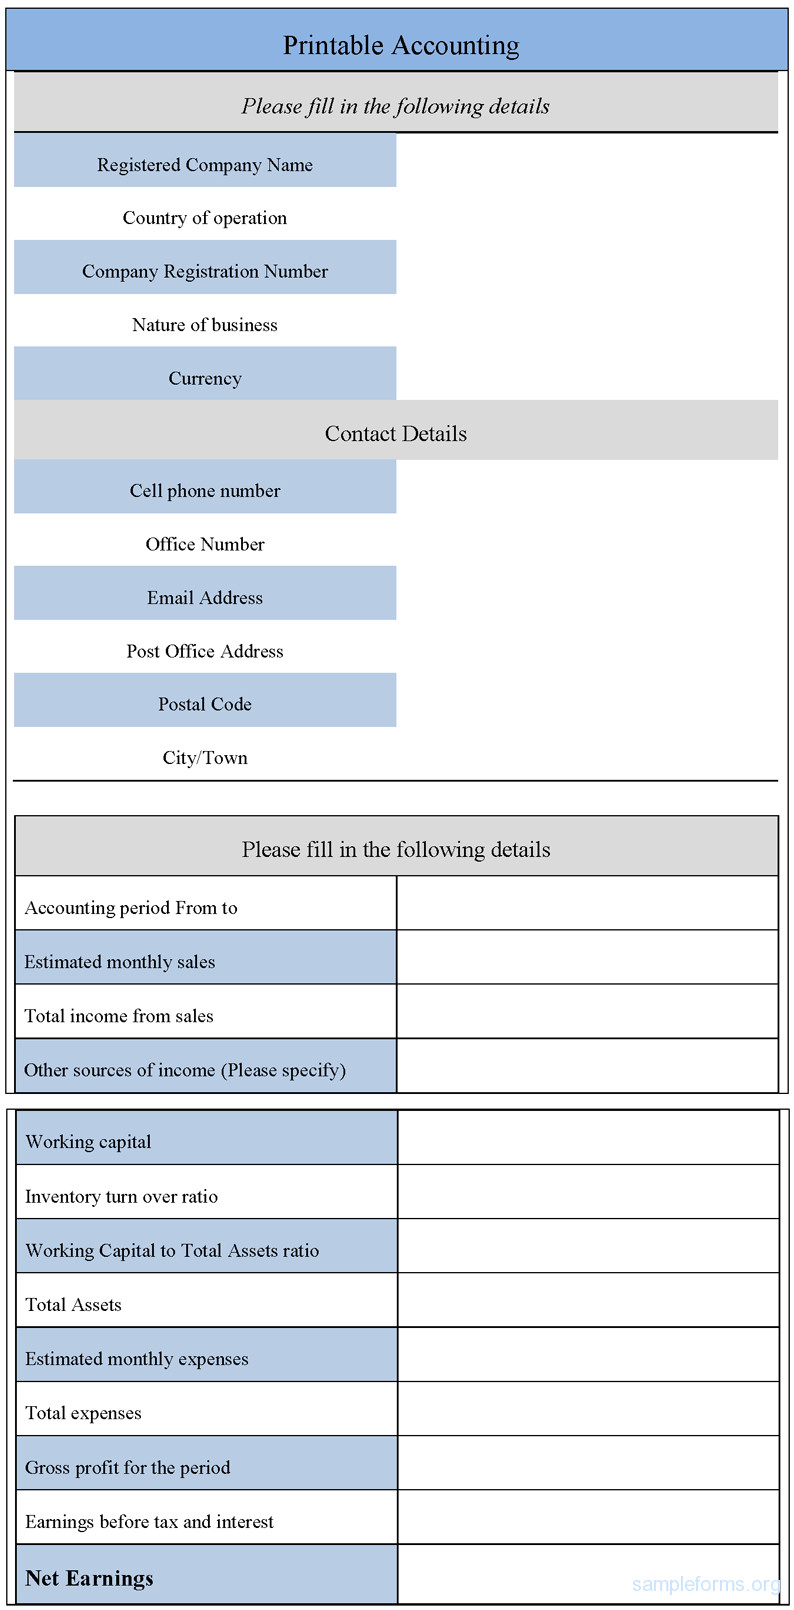 Printable Accounting Form Sample Forms